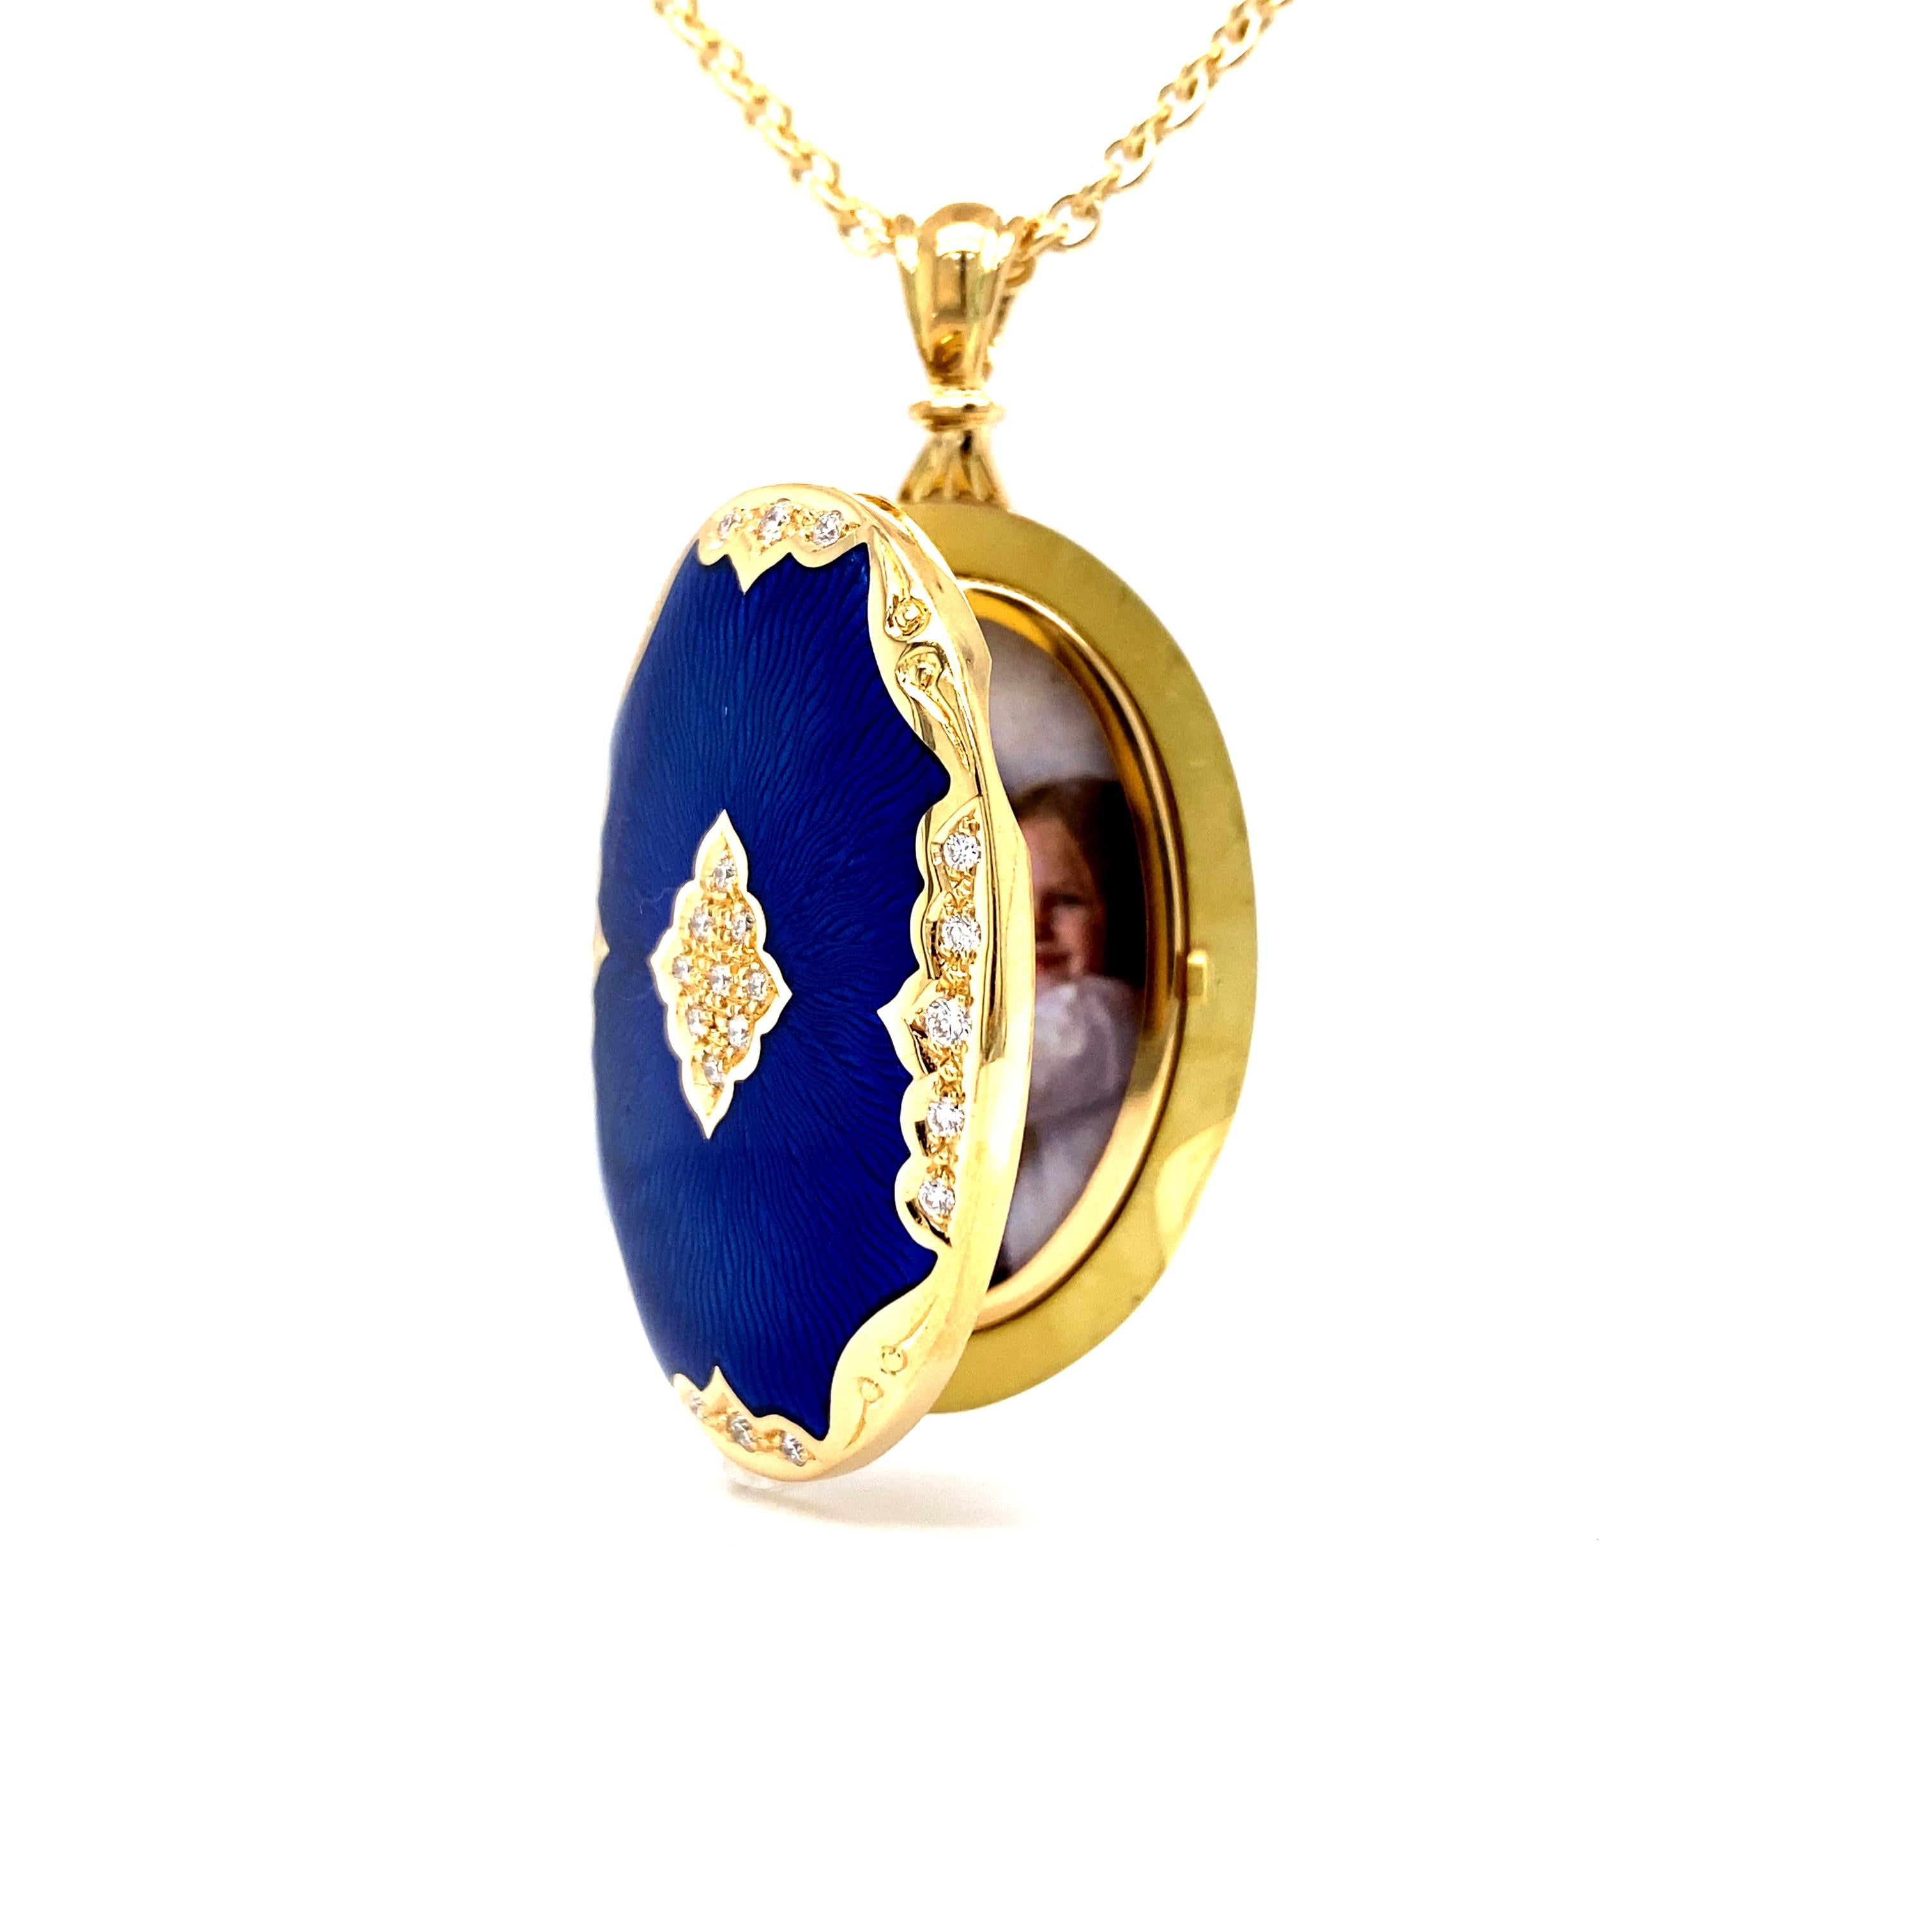 Oval Locket Pendant Necklace 18k Yellow Gold Blue Enamel 25 Diamonds 0.19 Carat For Sale 5